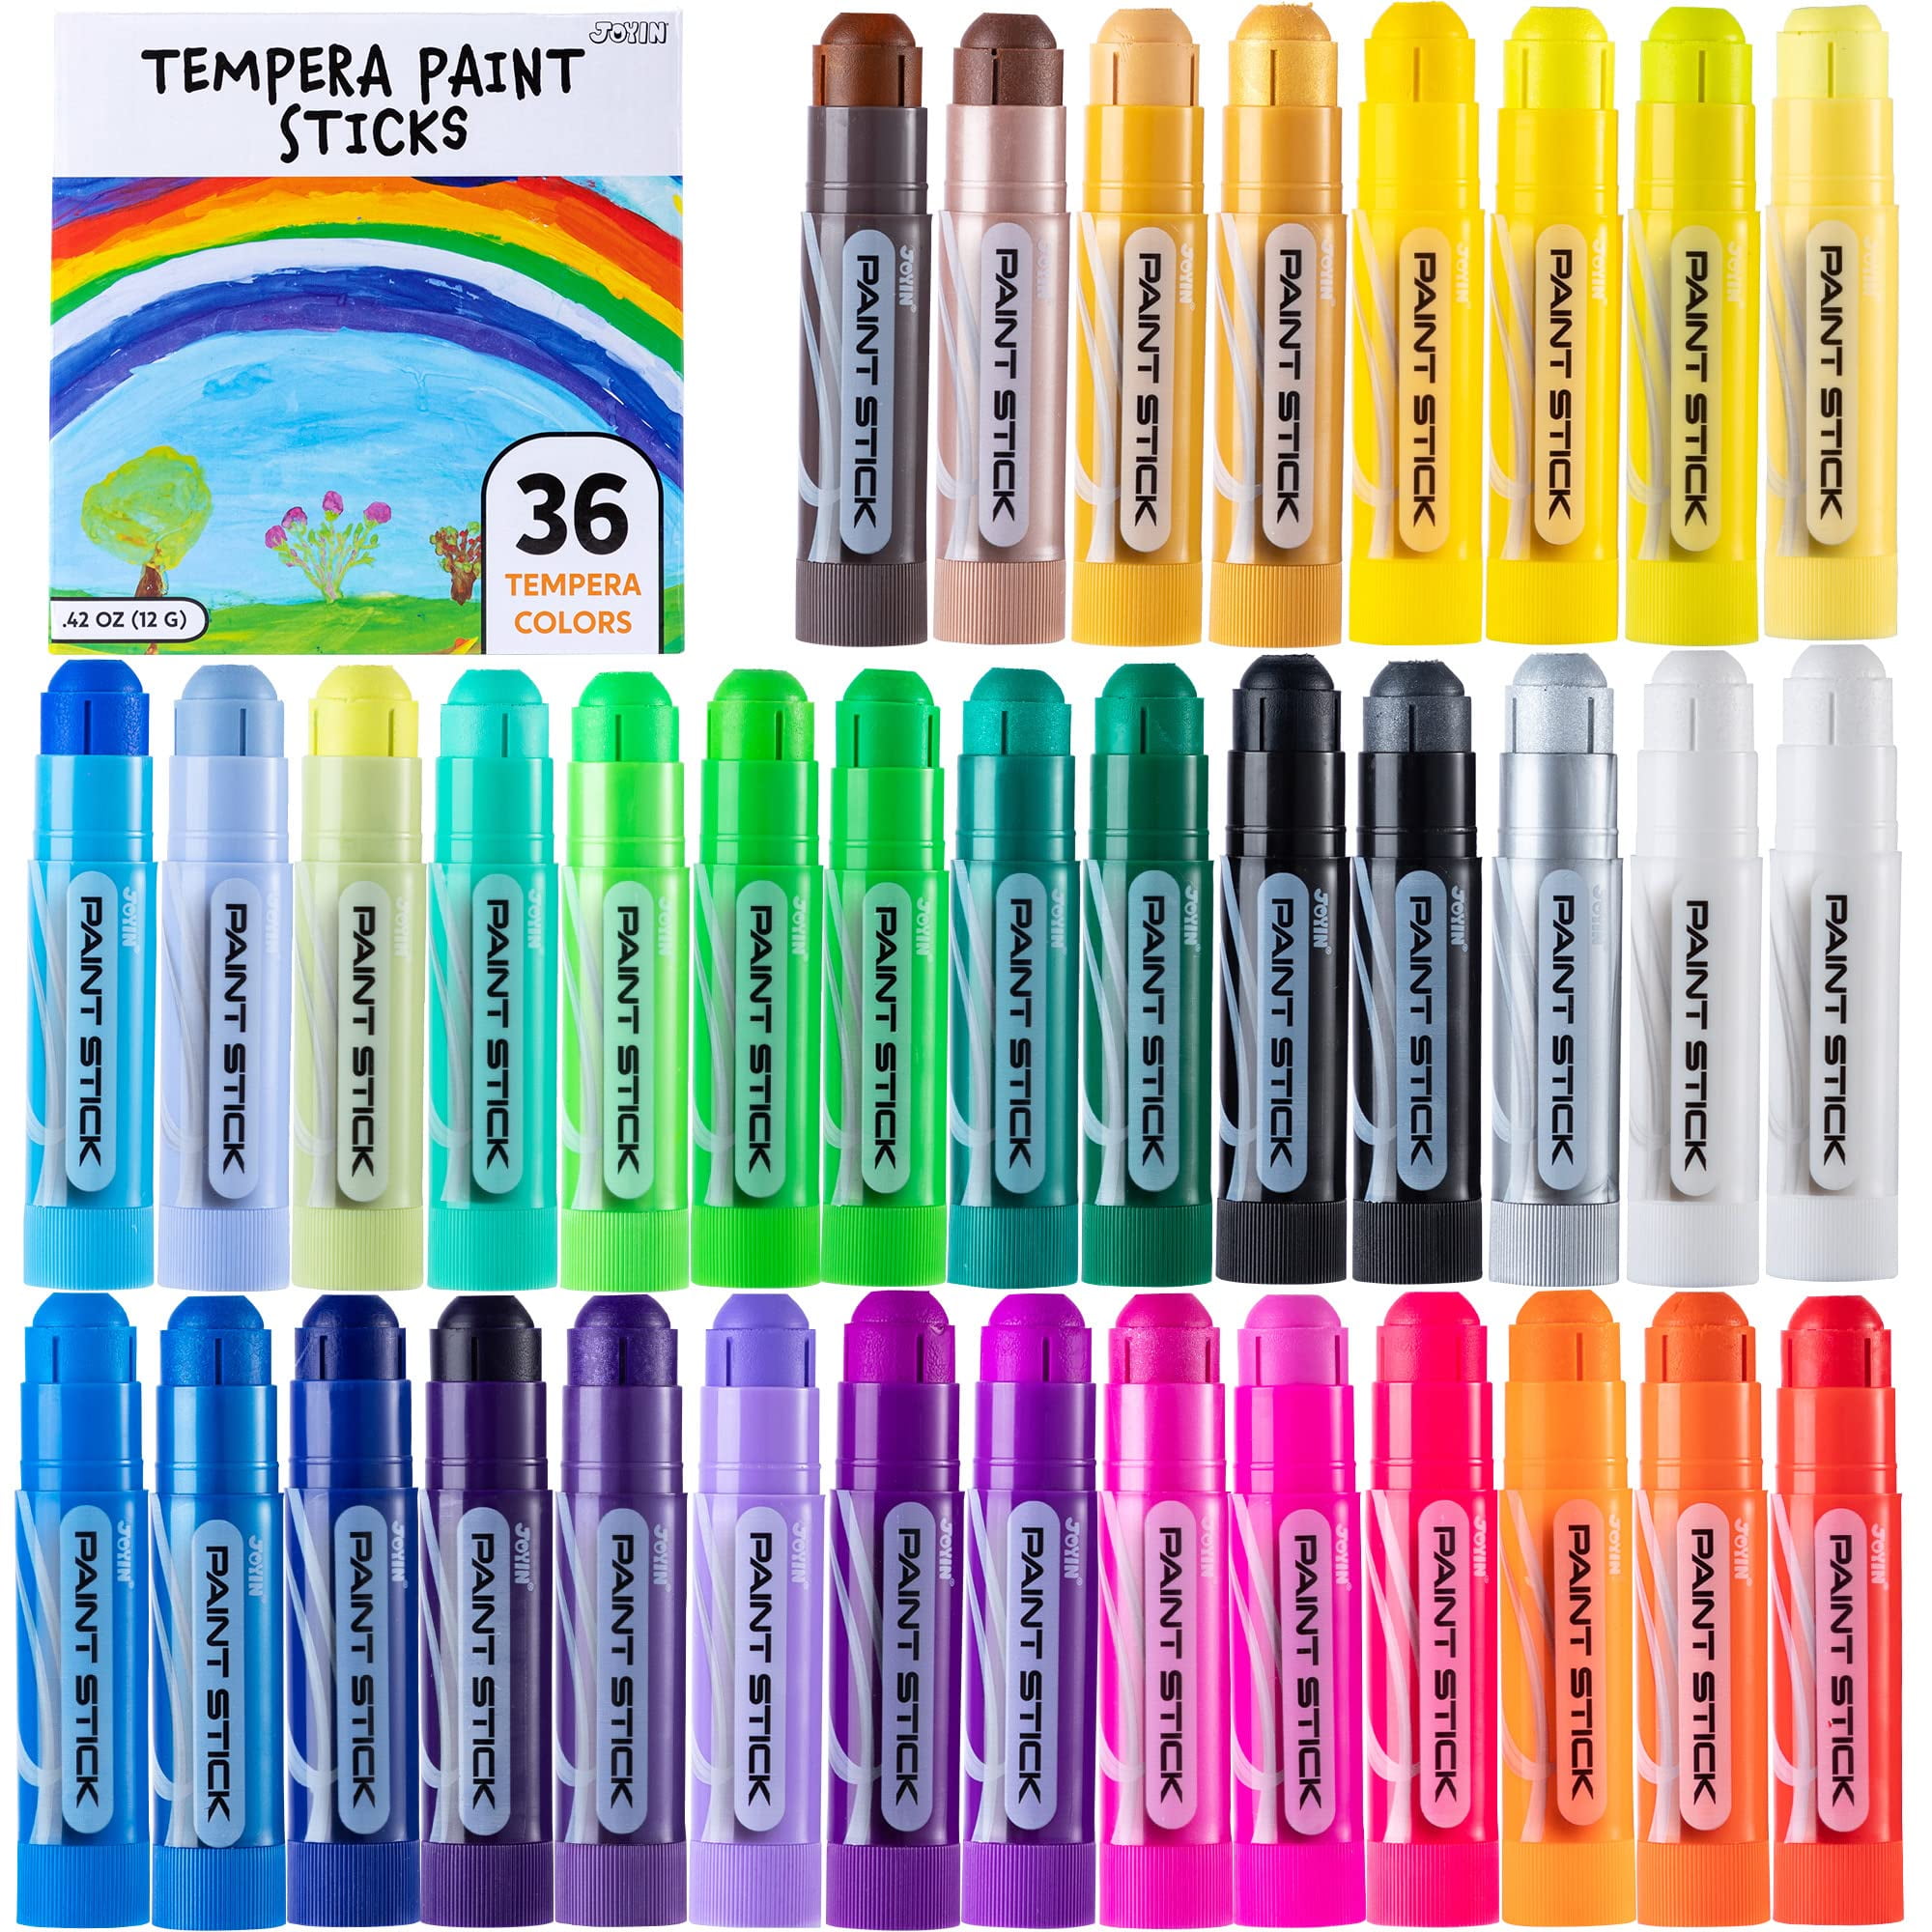 Kwik Stix Solid Tempera Paint Sticks, Classic Colors, 12 per Pack, 2 Packs